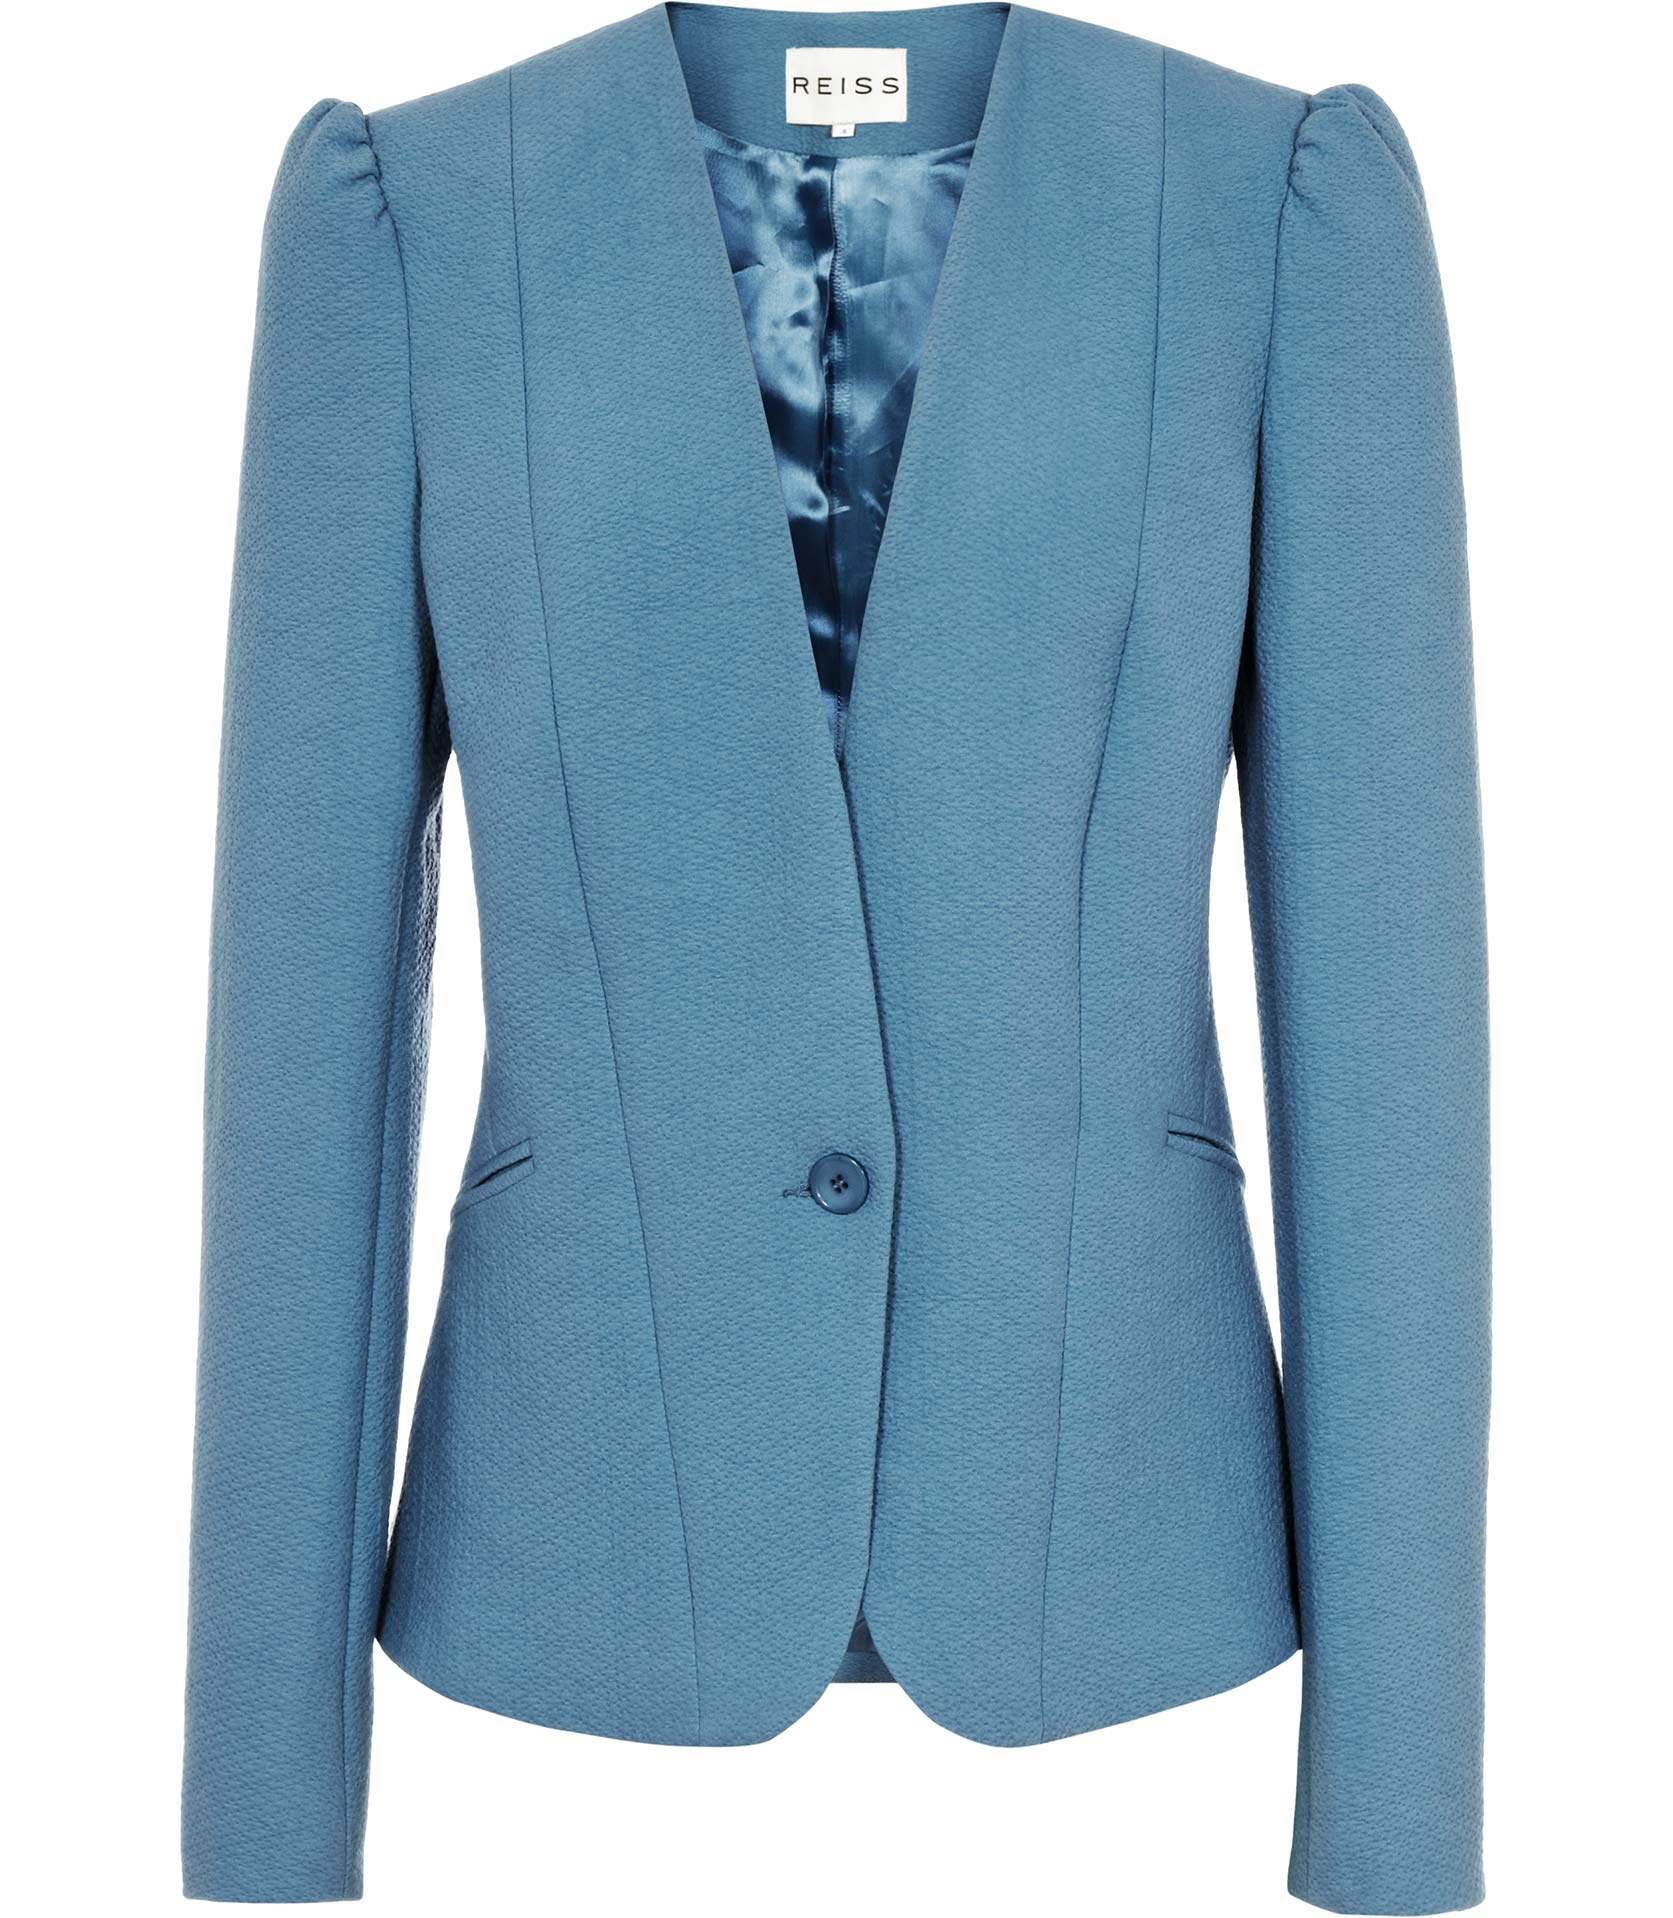 Lyst - Reiss Lolli Plain Collarless Puff Shoulder Jacket in Blue